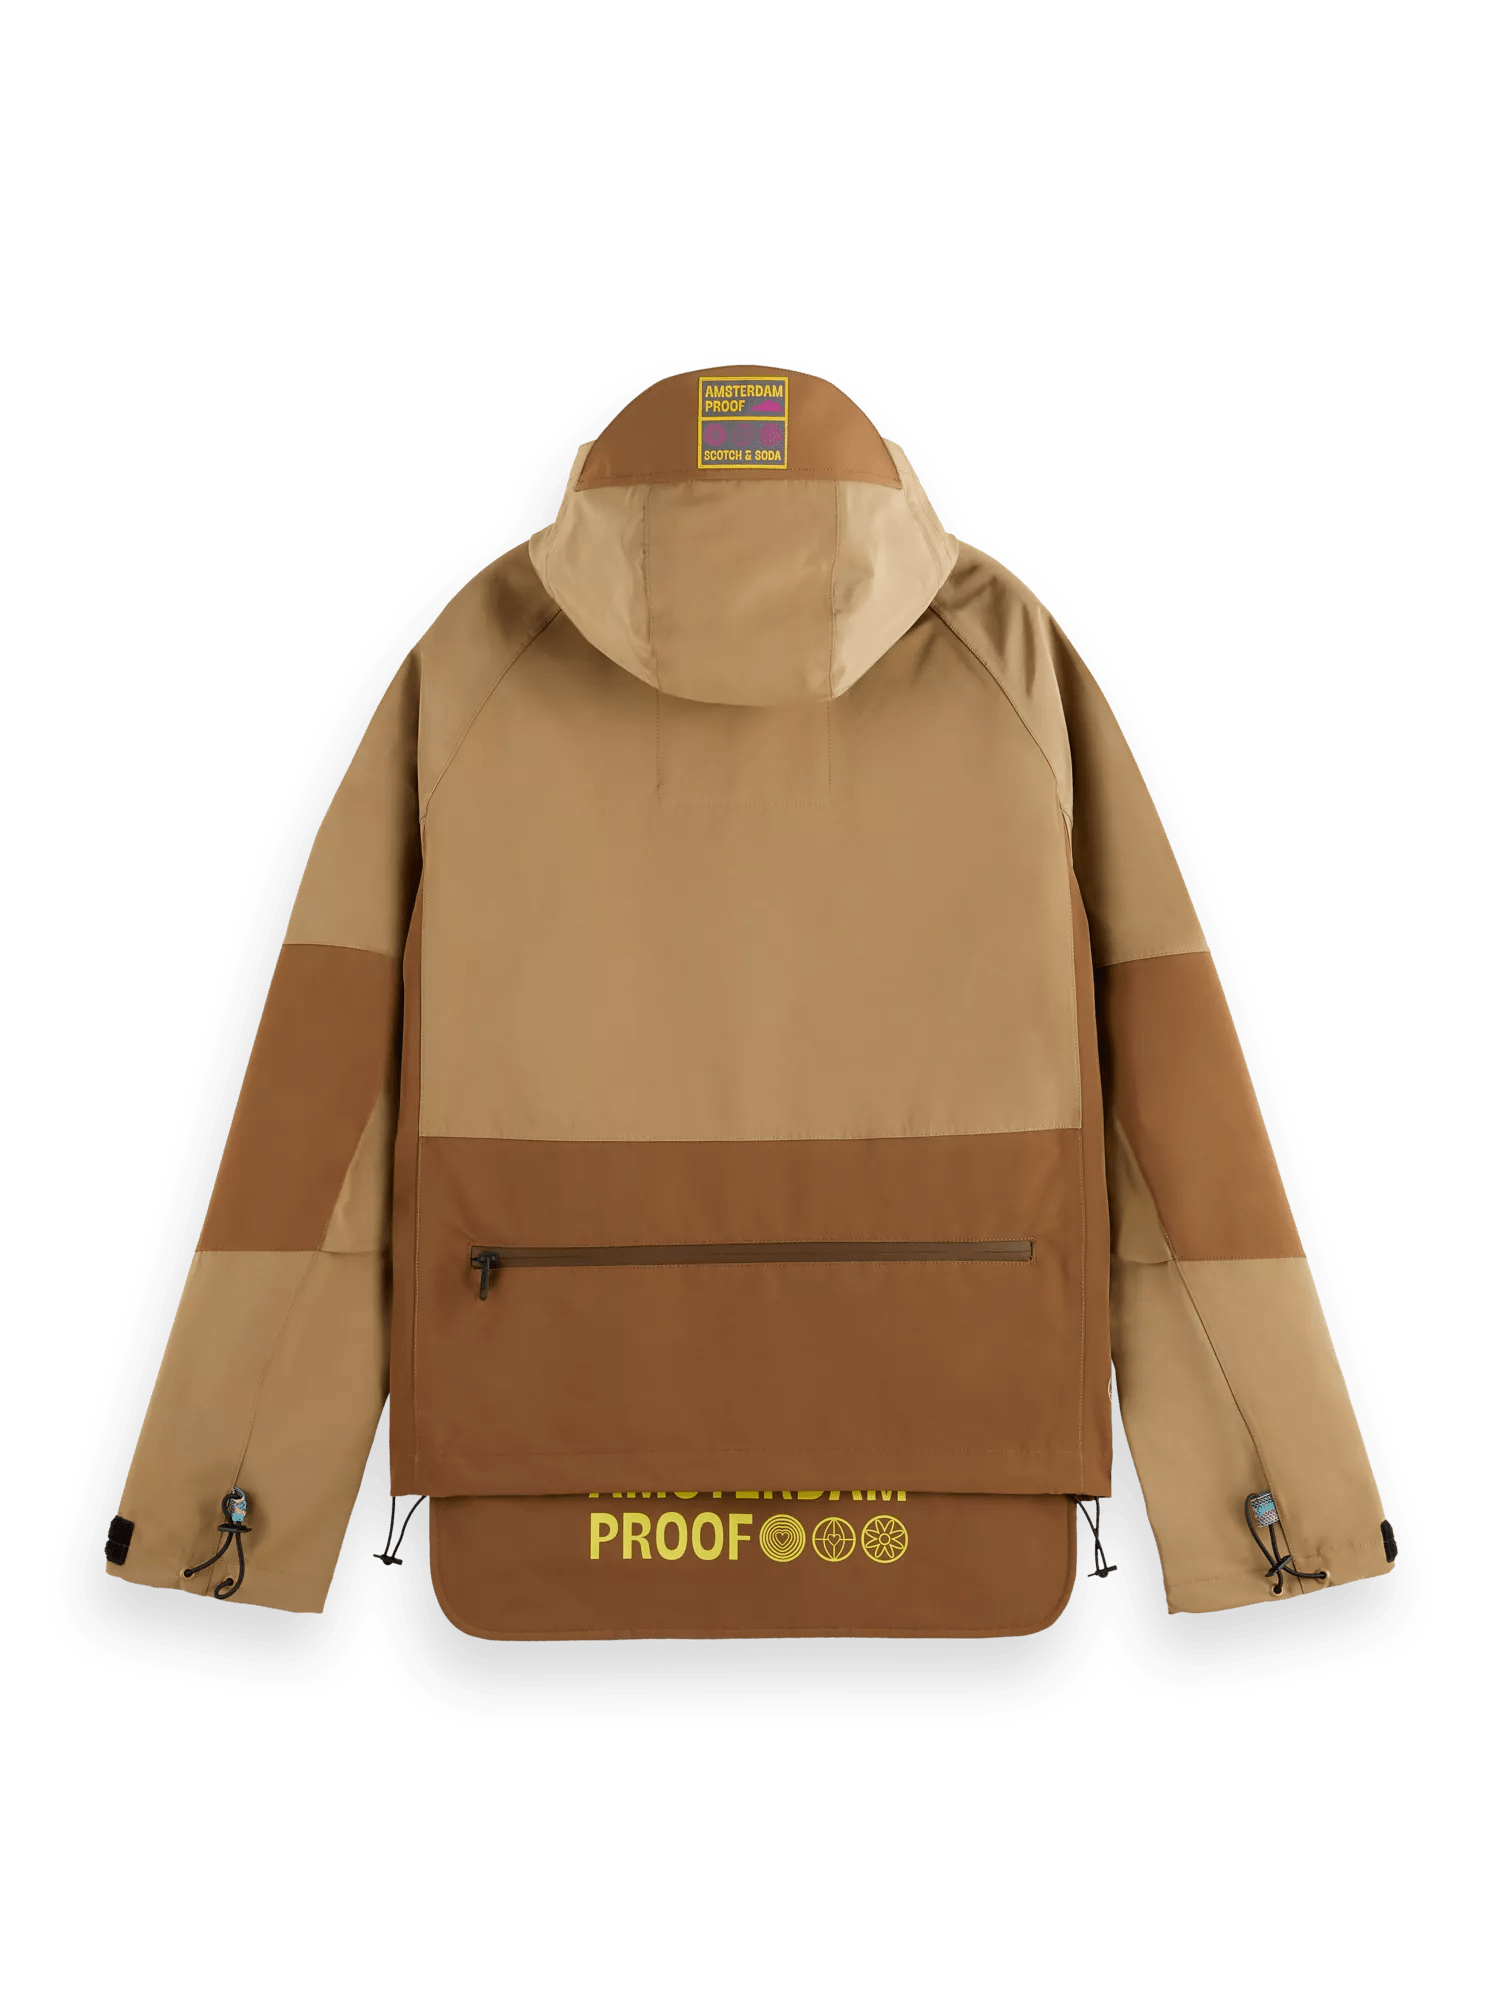 Scotch & Soda Amsterdam proof Raincoat - Foldable Jacket BCK